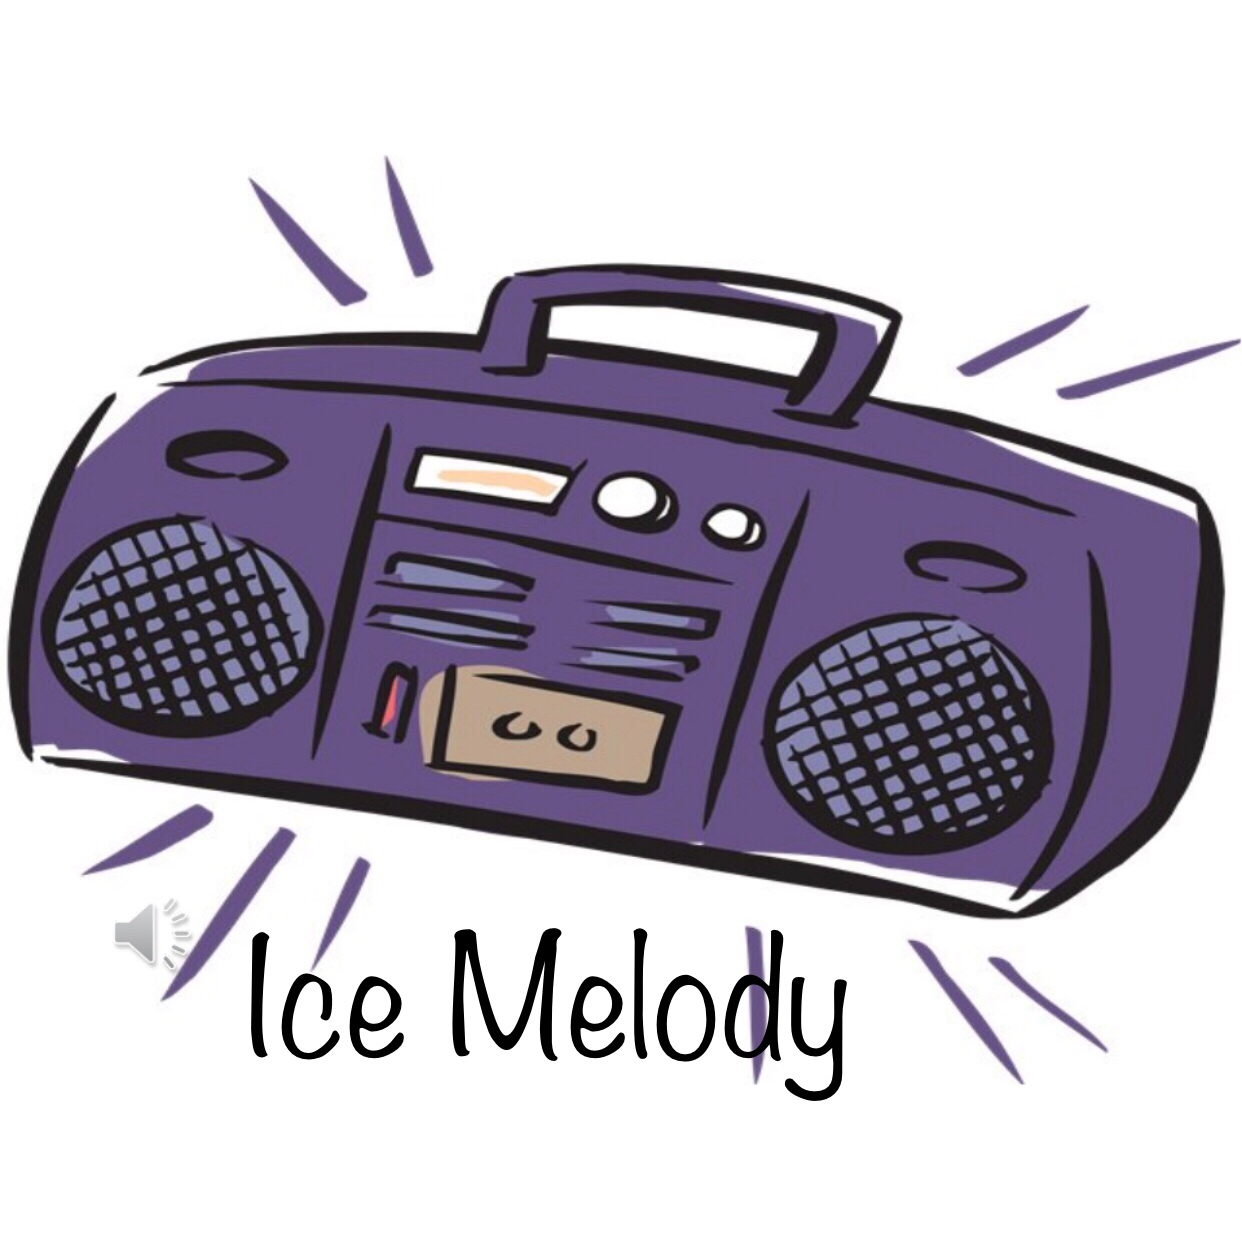 Ice melody